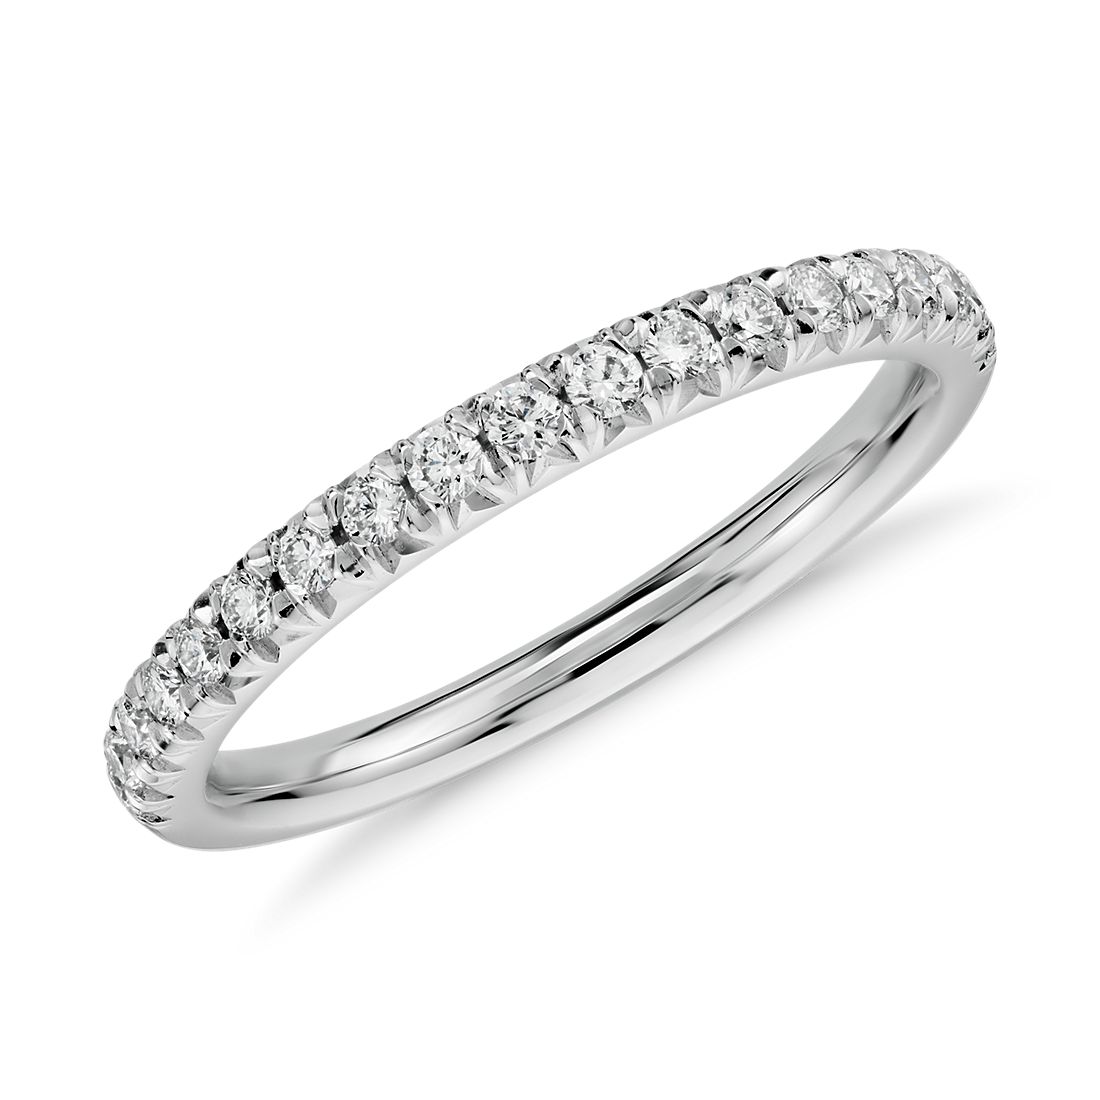 French Pavé Diamond Ring in 14k White Gold (1/4 ct. tw.)